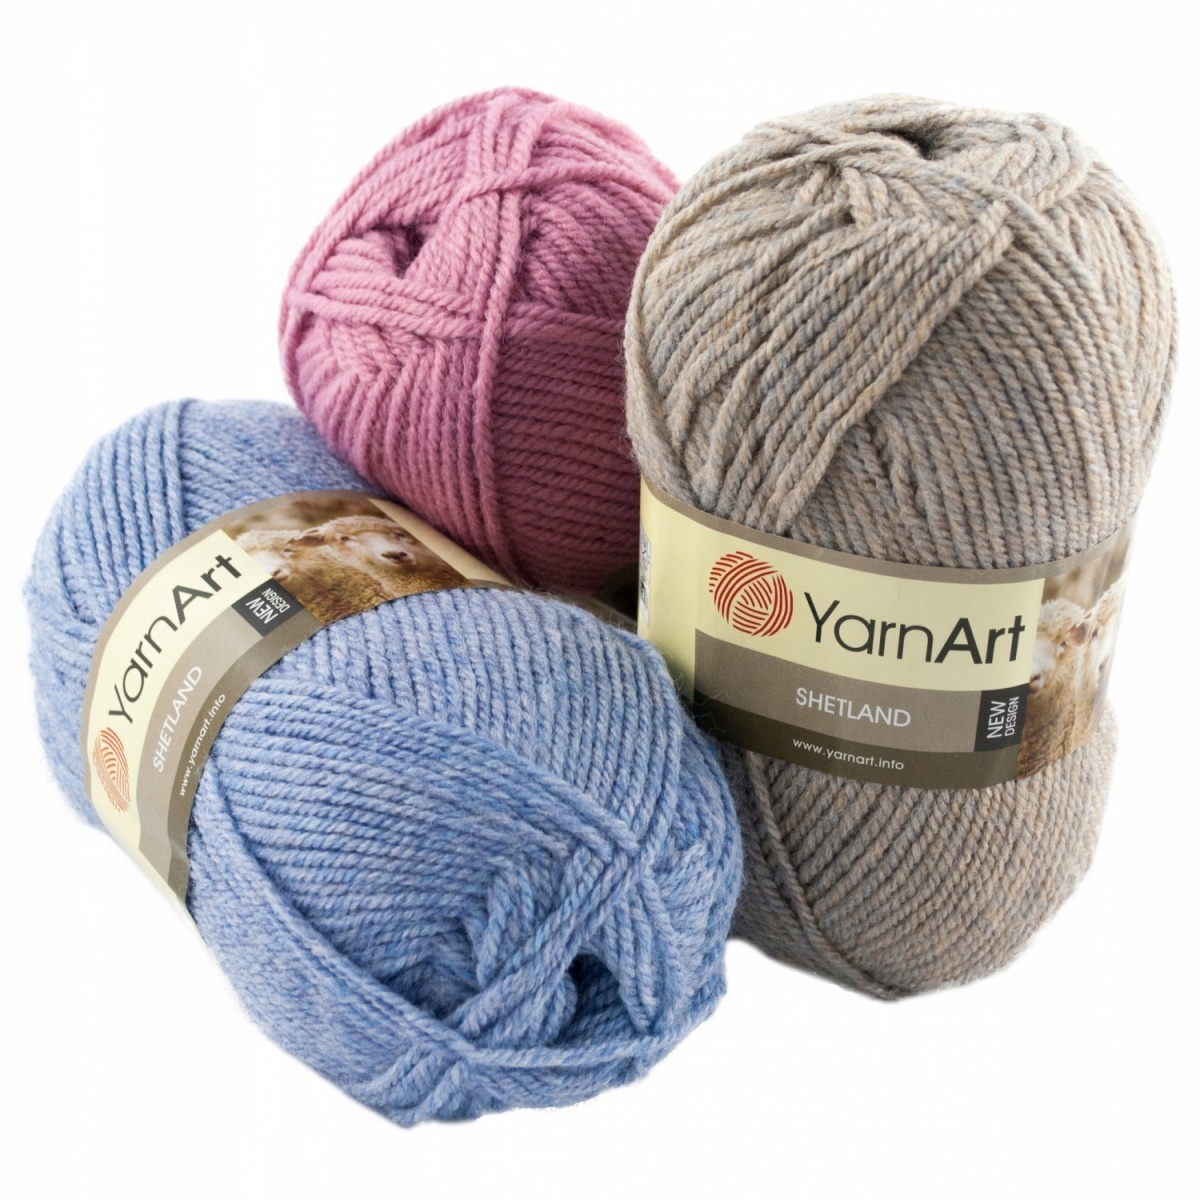 YarnArt Shetland 30% Virgin Wool, 70% Acrylic, 5 Skein Value Pack, 500g фото 1